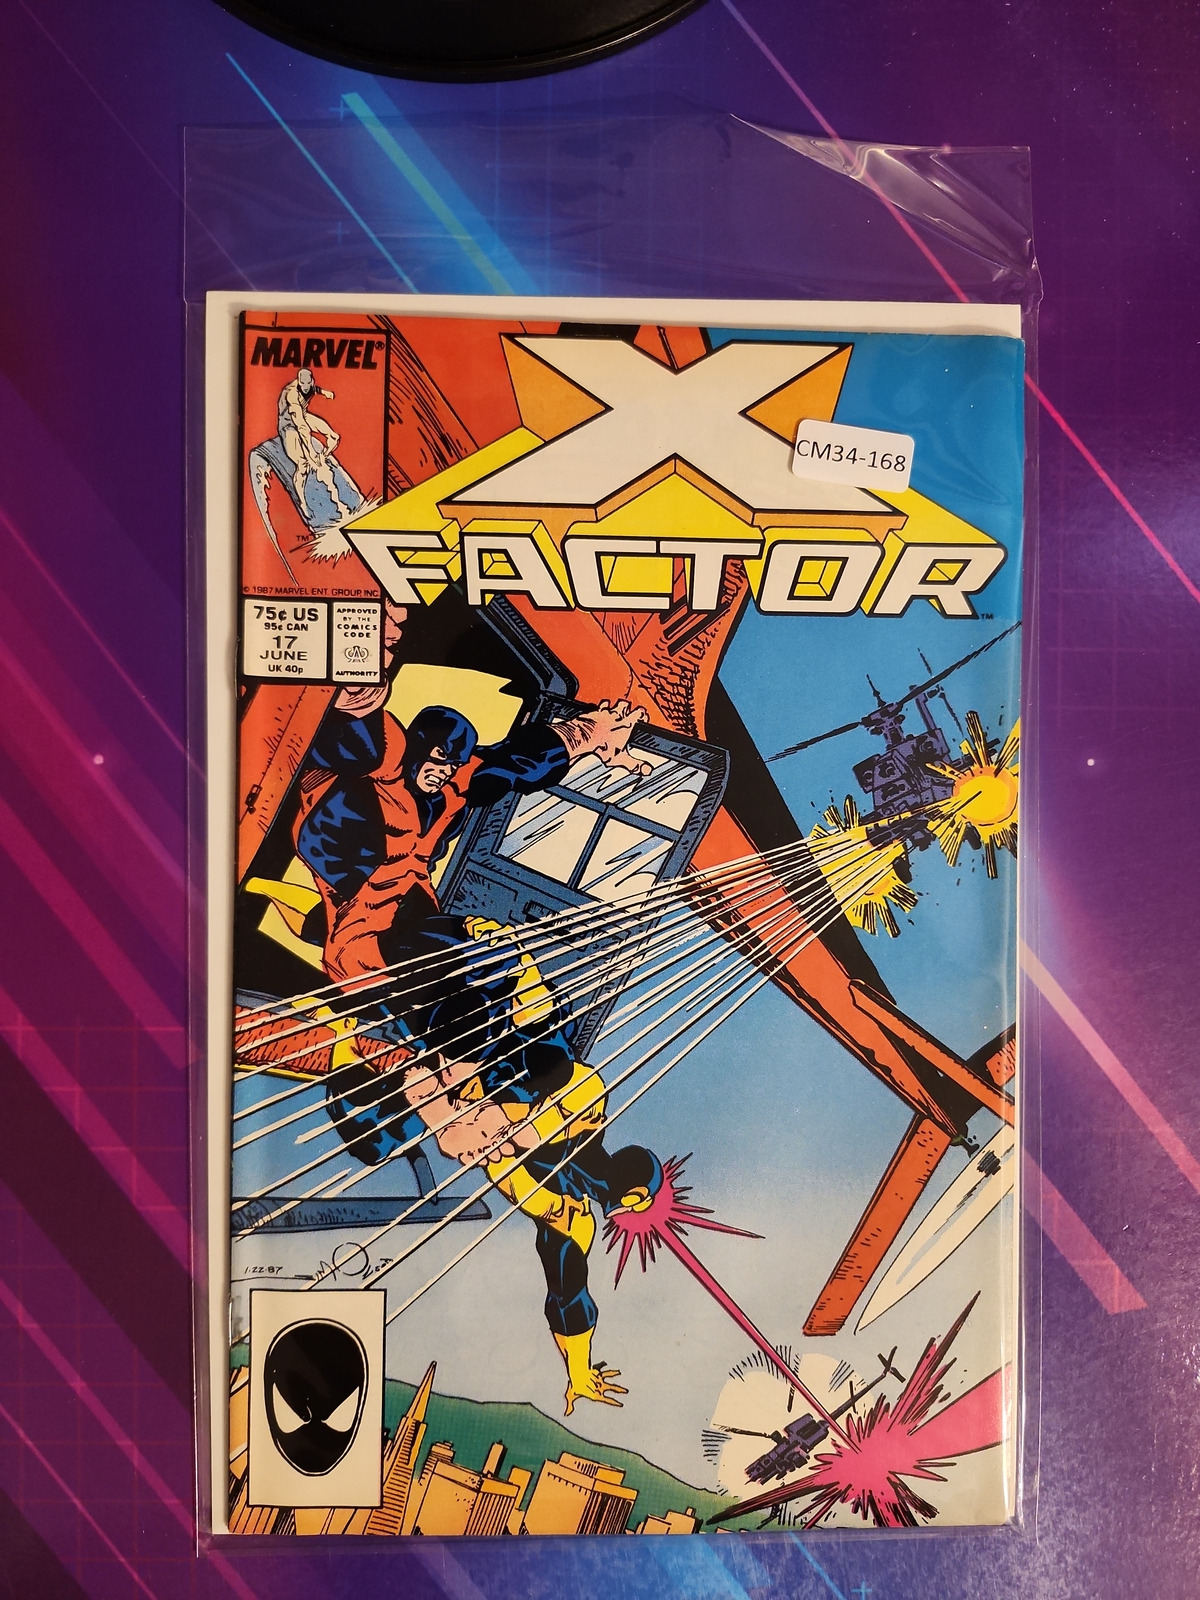 X-FACTOR #17 VOL. 1 HIGHER GRADE 1ST APP MARVEL COMIC BOOK CM34-168